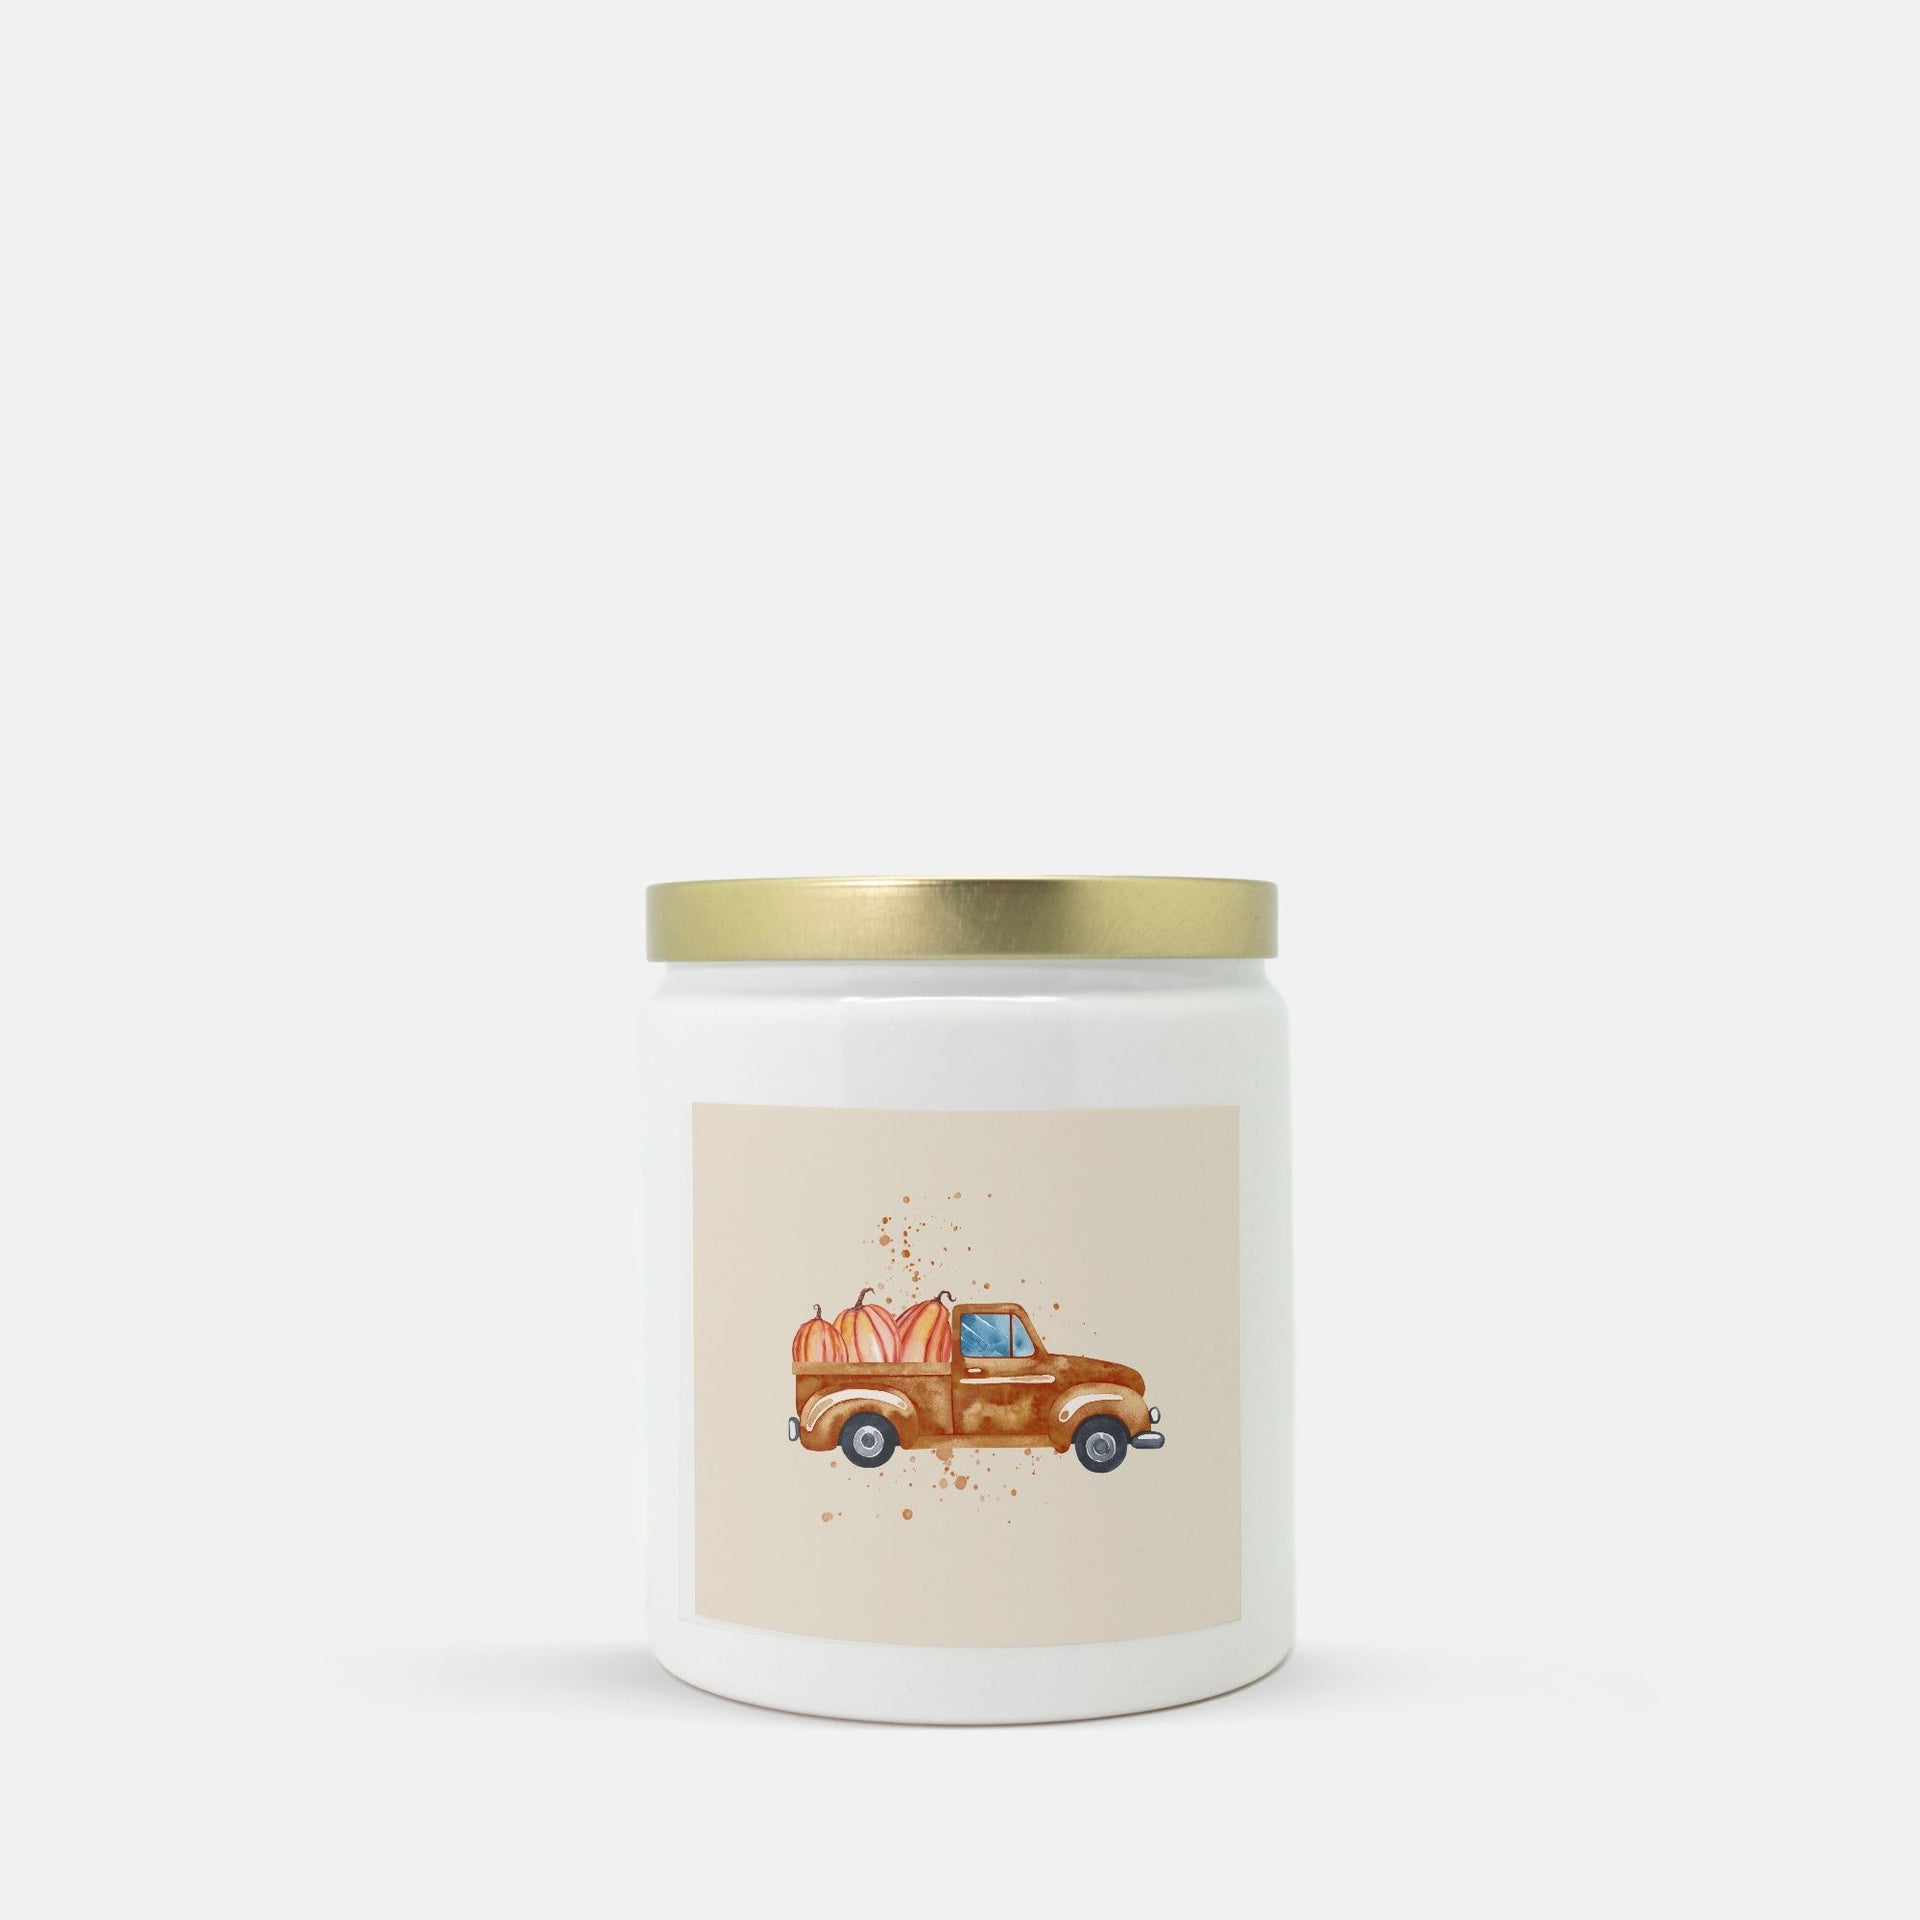 Lifestyle Details - Brown Rustic Truck & Pumpkins Ceramic Candle w Gold Lid - Macintosh